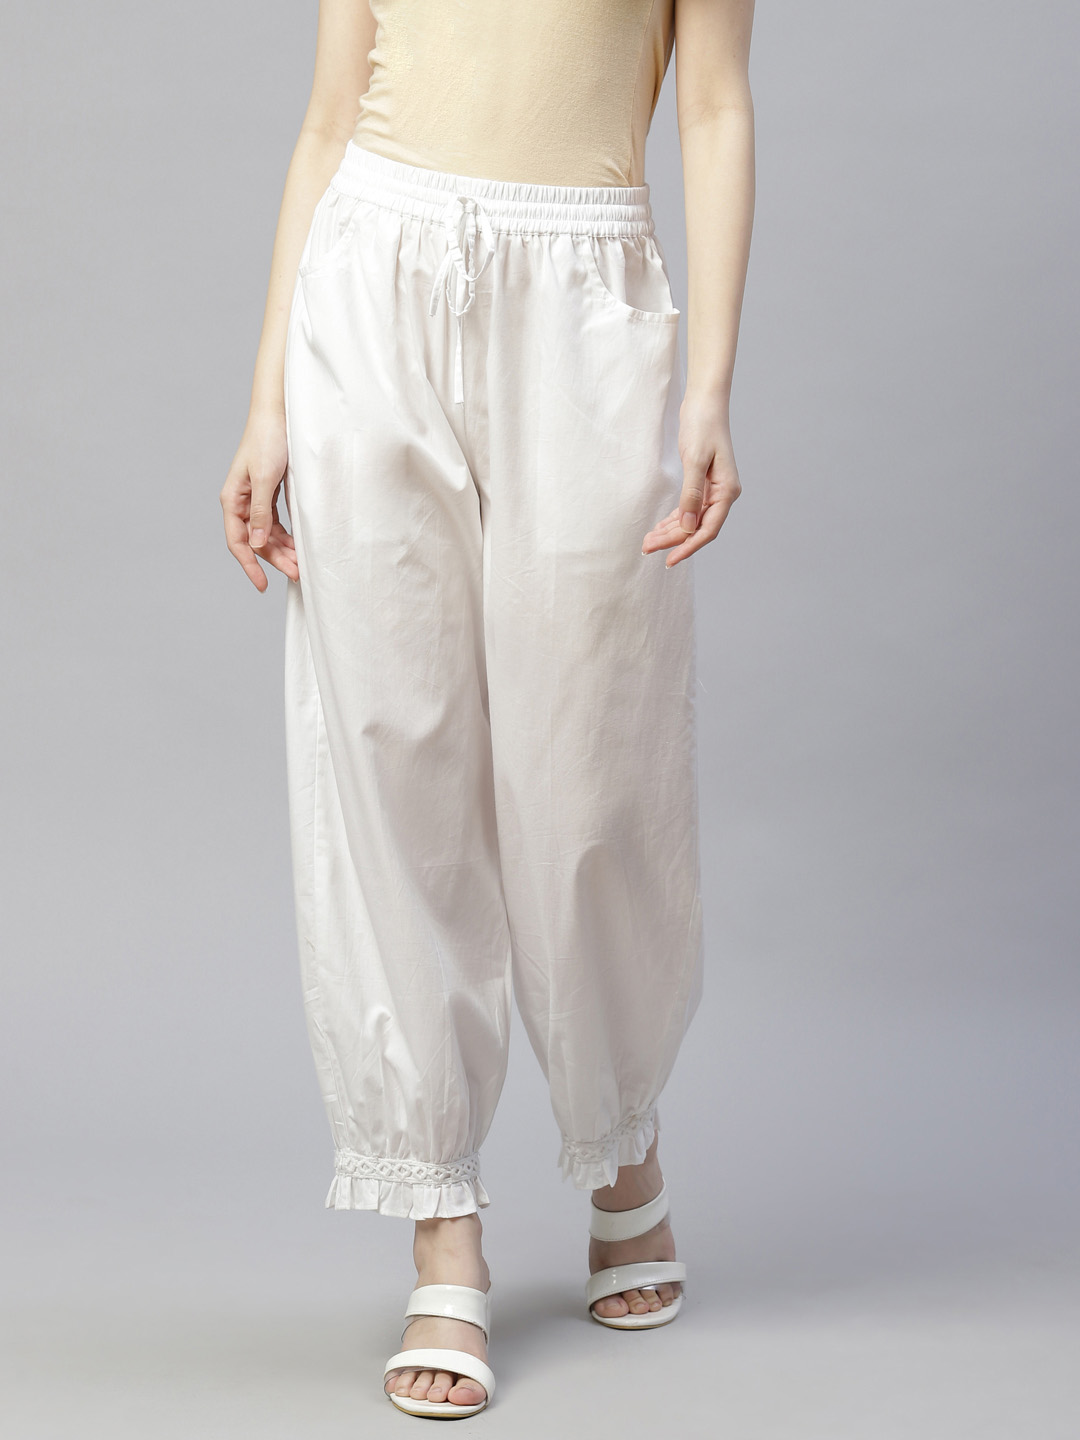 Cotton Linen Harem Pants for Women Elastric Waist Lace Patchwork Capri  Trousers with Pockets Floral Embroidery Ruffle Hem Plus Size Casual Pant -  Walmart.com